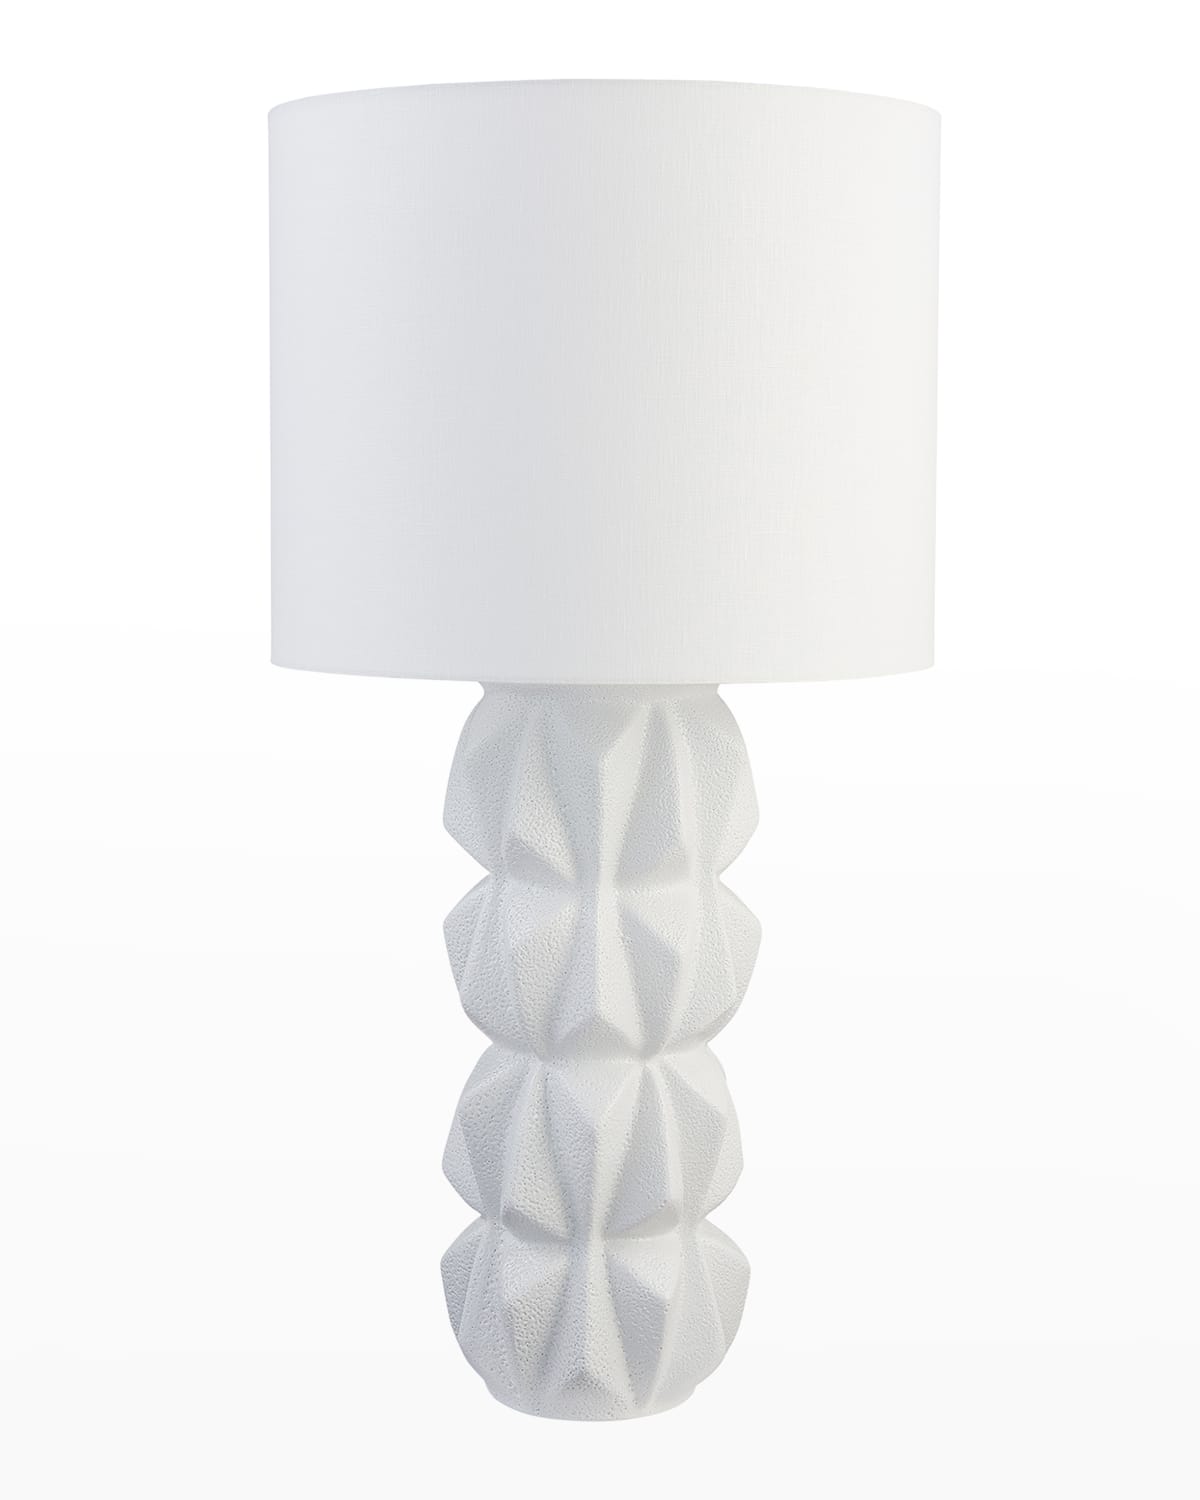 Grenade Column Table Lamp